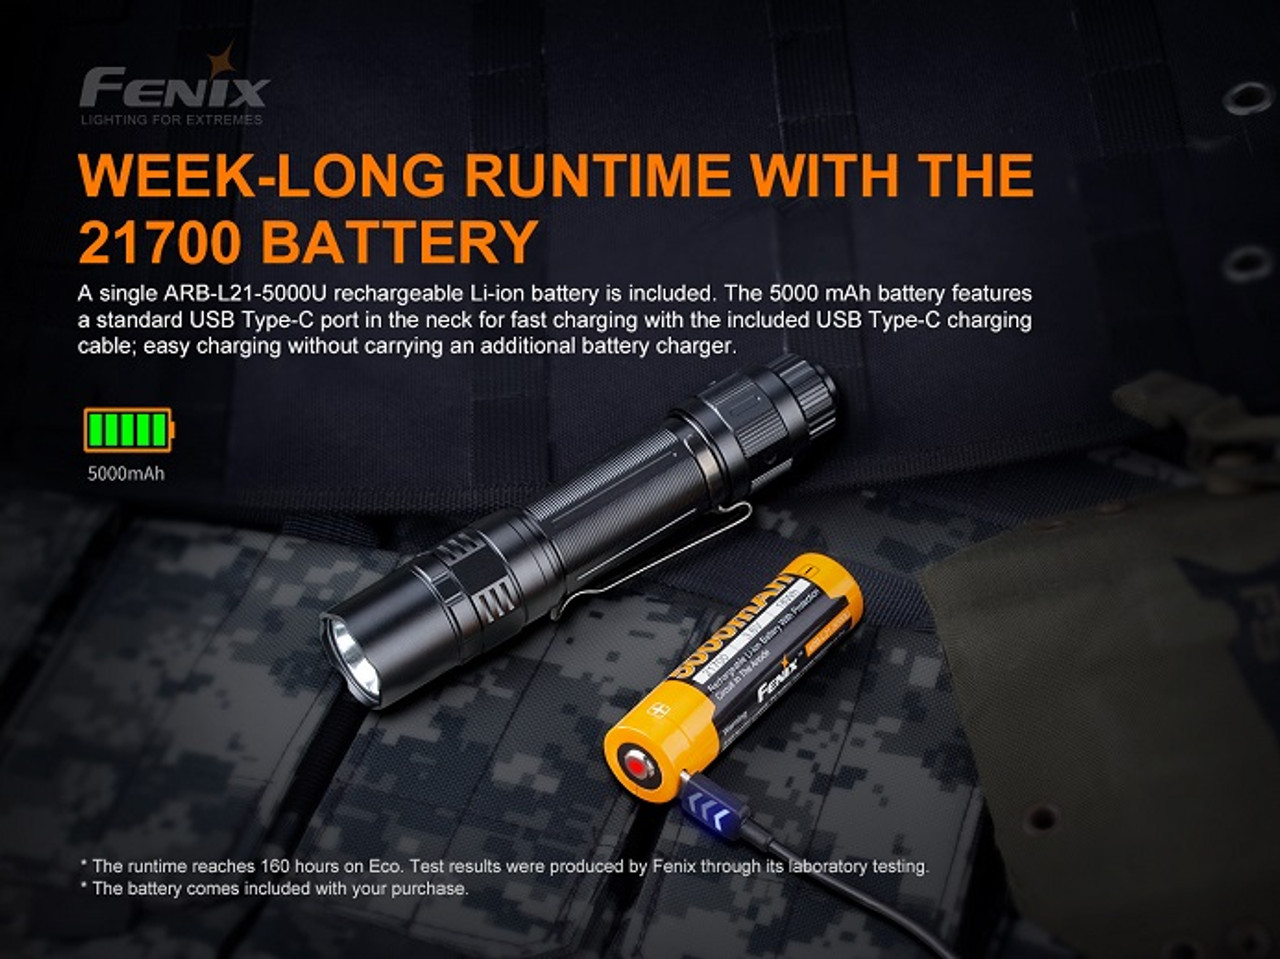 PD36-TAC - Fenix 3000 Lumen Tactical Flashlight. (21700 battery included)